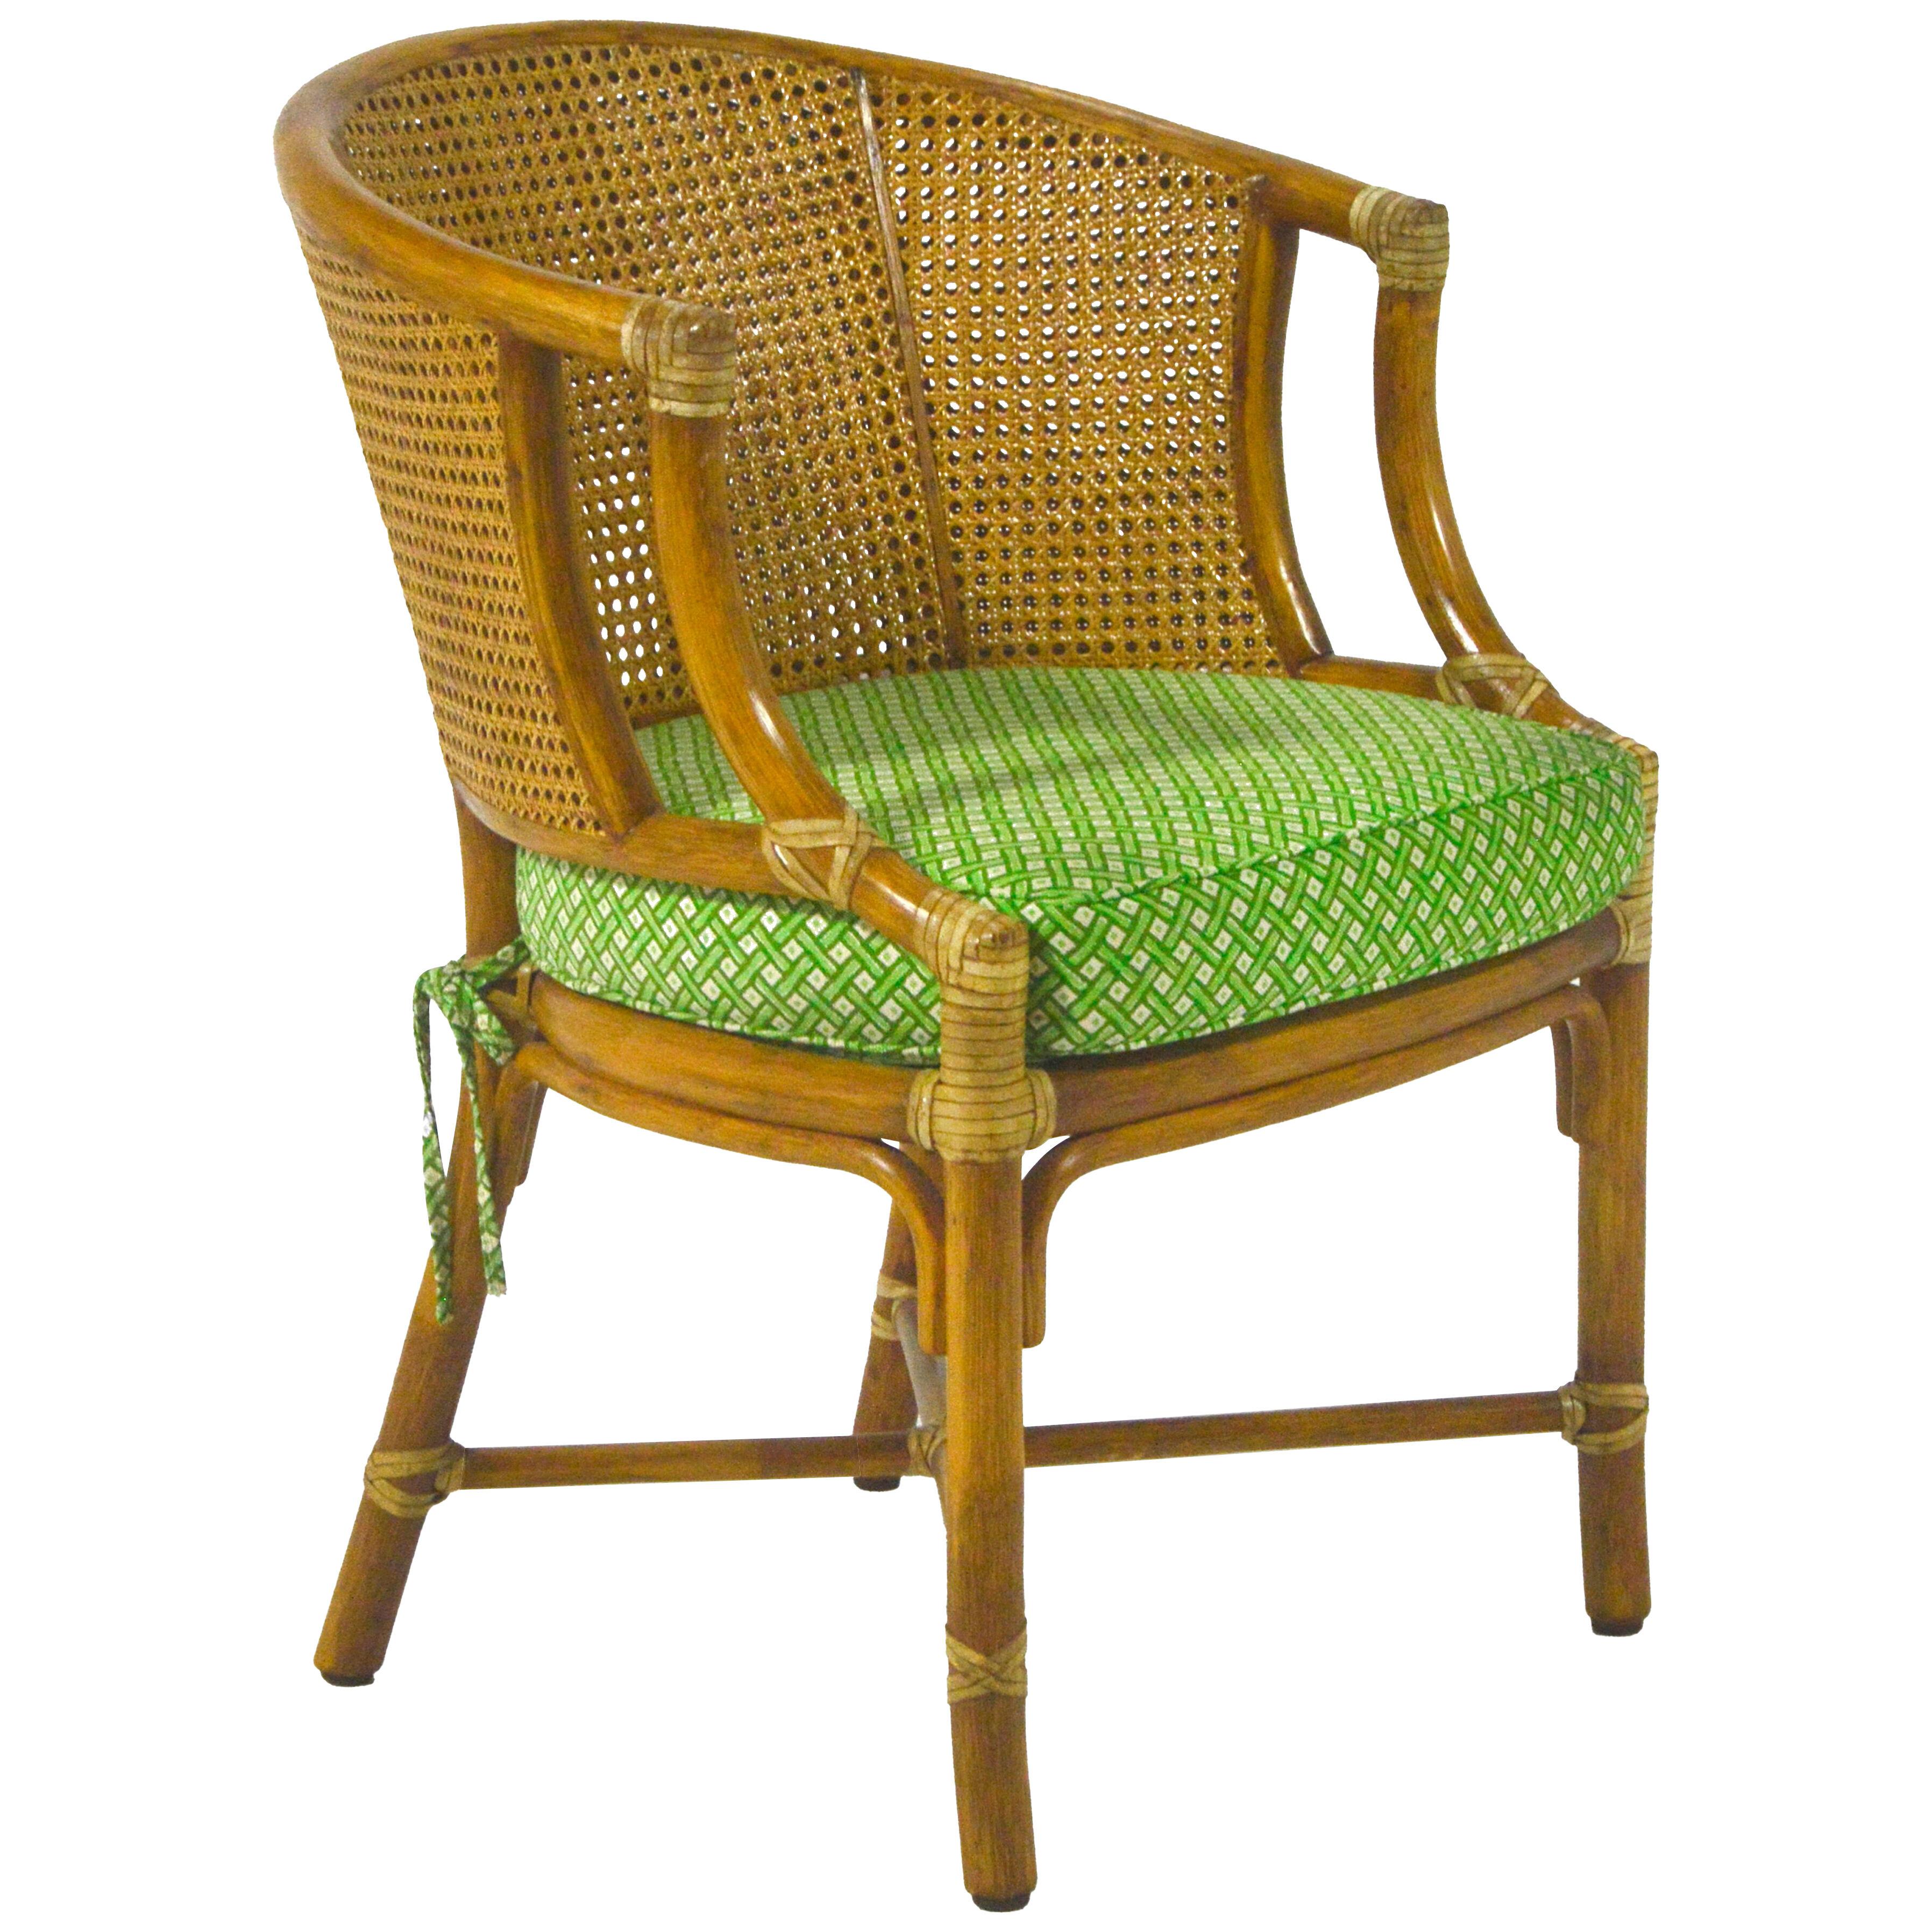 Elinor McGuire M-88 Rattan & Cane Chair